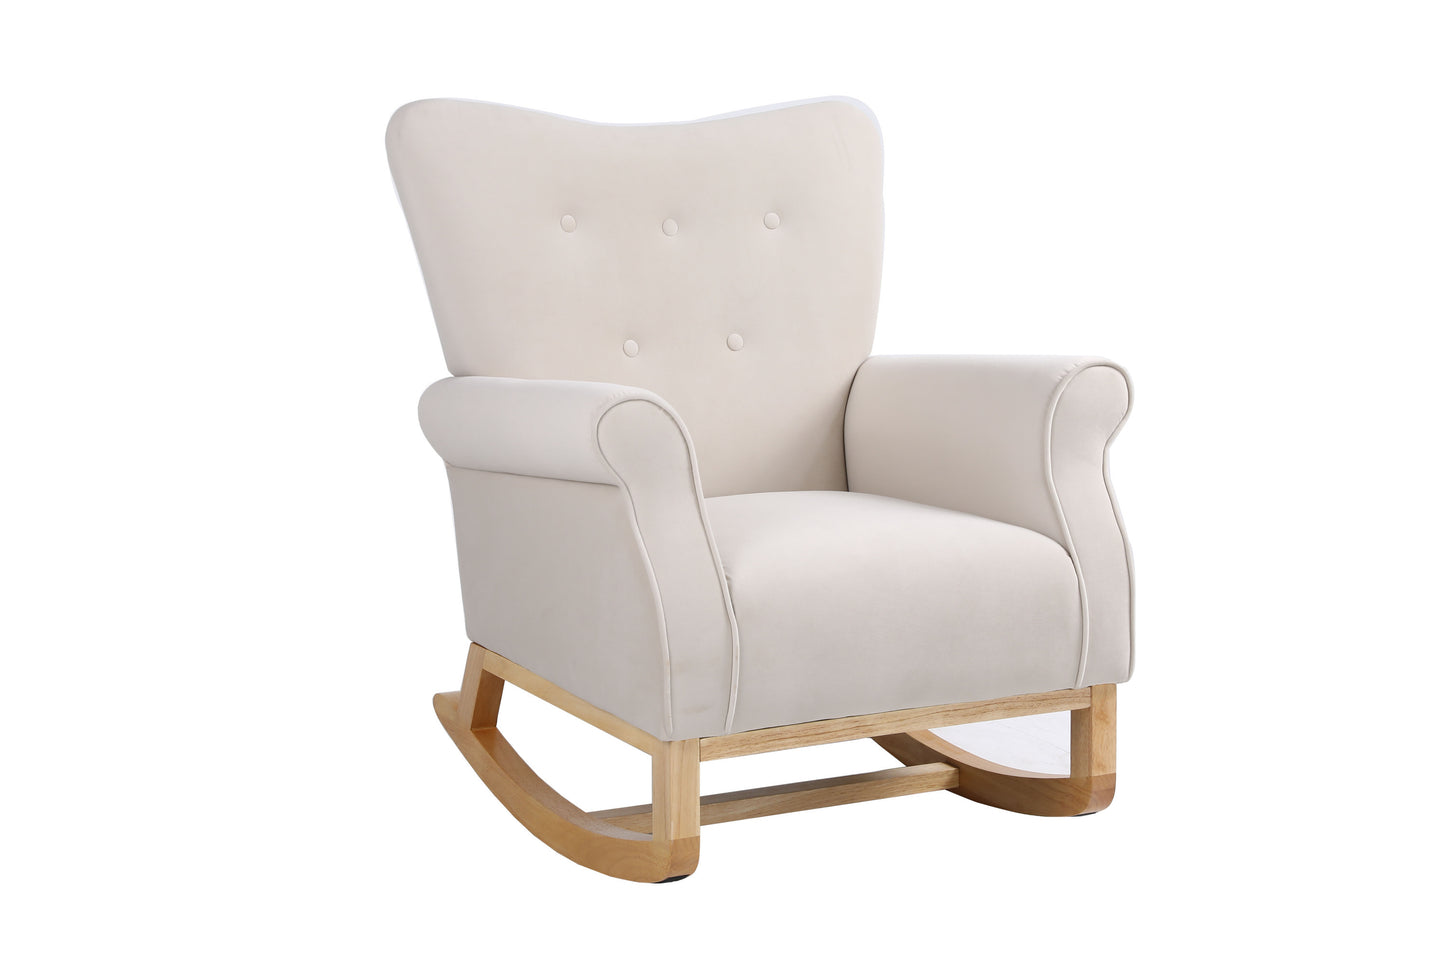 Baby Room High Back Rocking Chair Nursery Chair , Comfortable Rocker Fabric Padded Seat ,Modern High Back Armchair